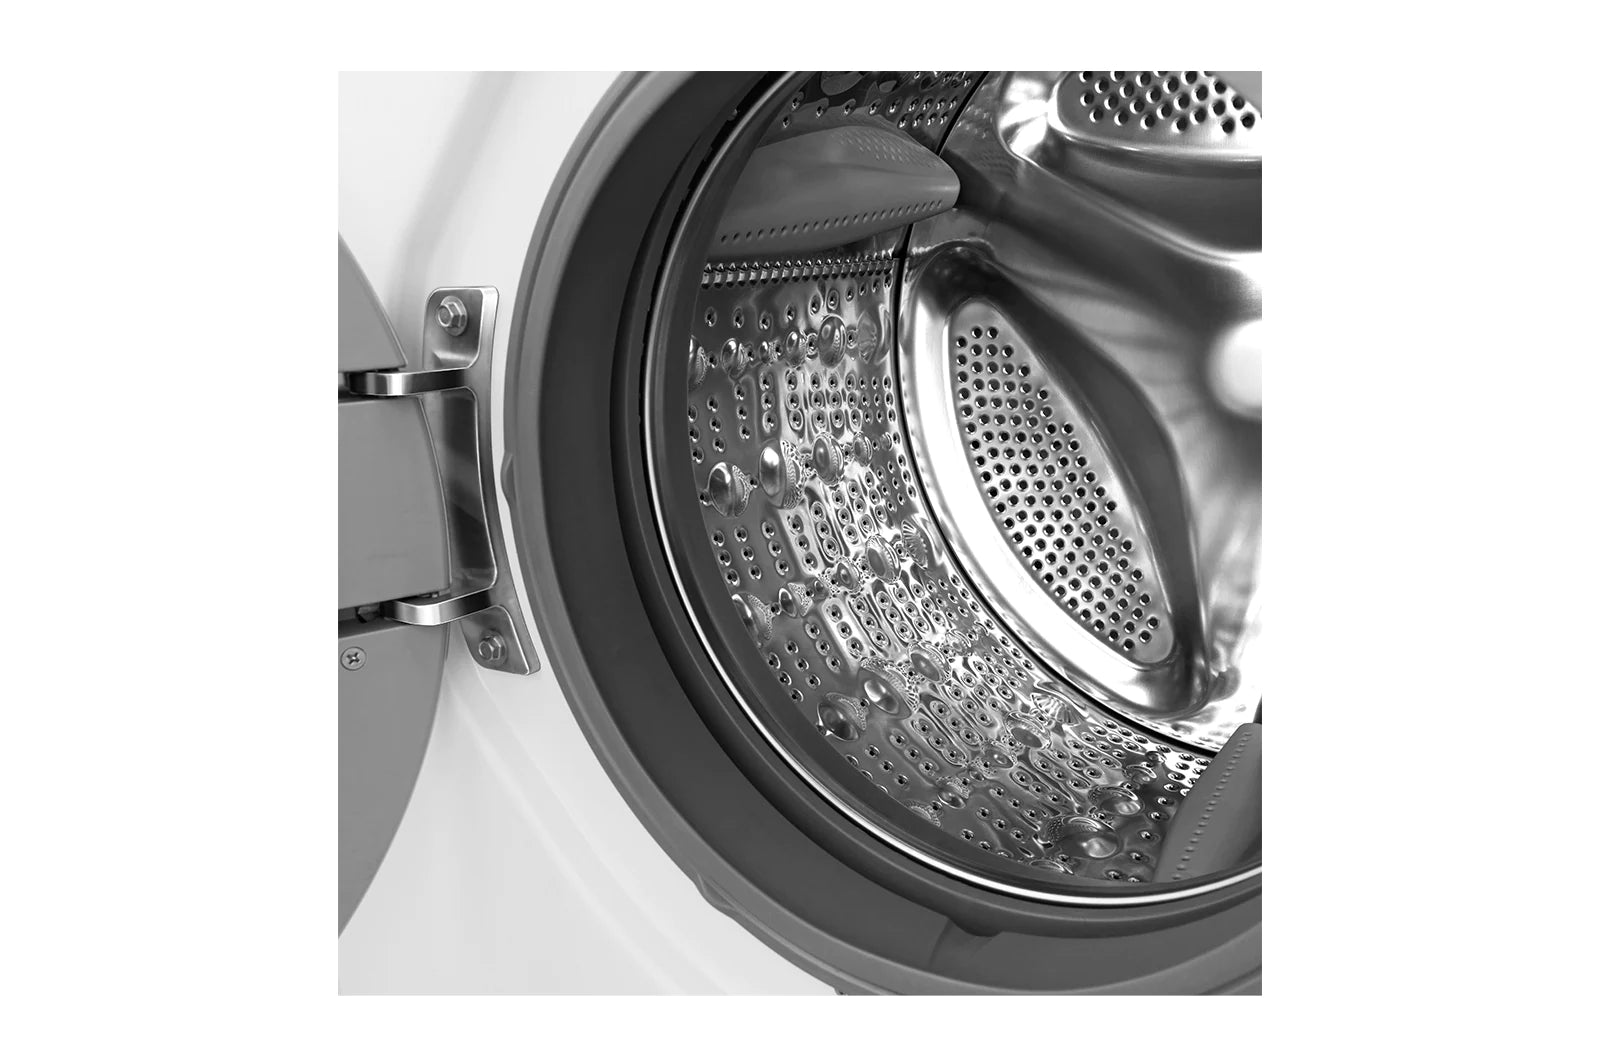 LG 樂金 WF-CT1408MW 8公升洗衣/5公斤乾衣 1400轉 洗衣乾衣機